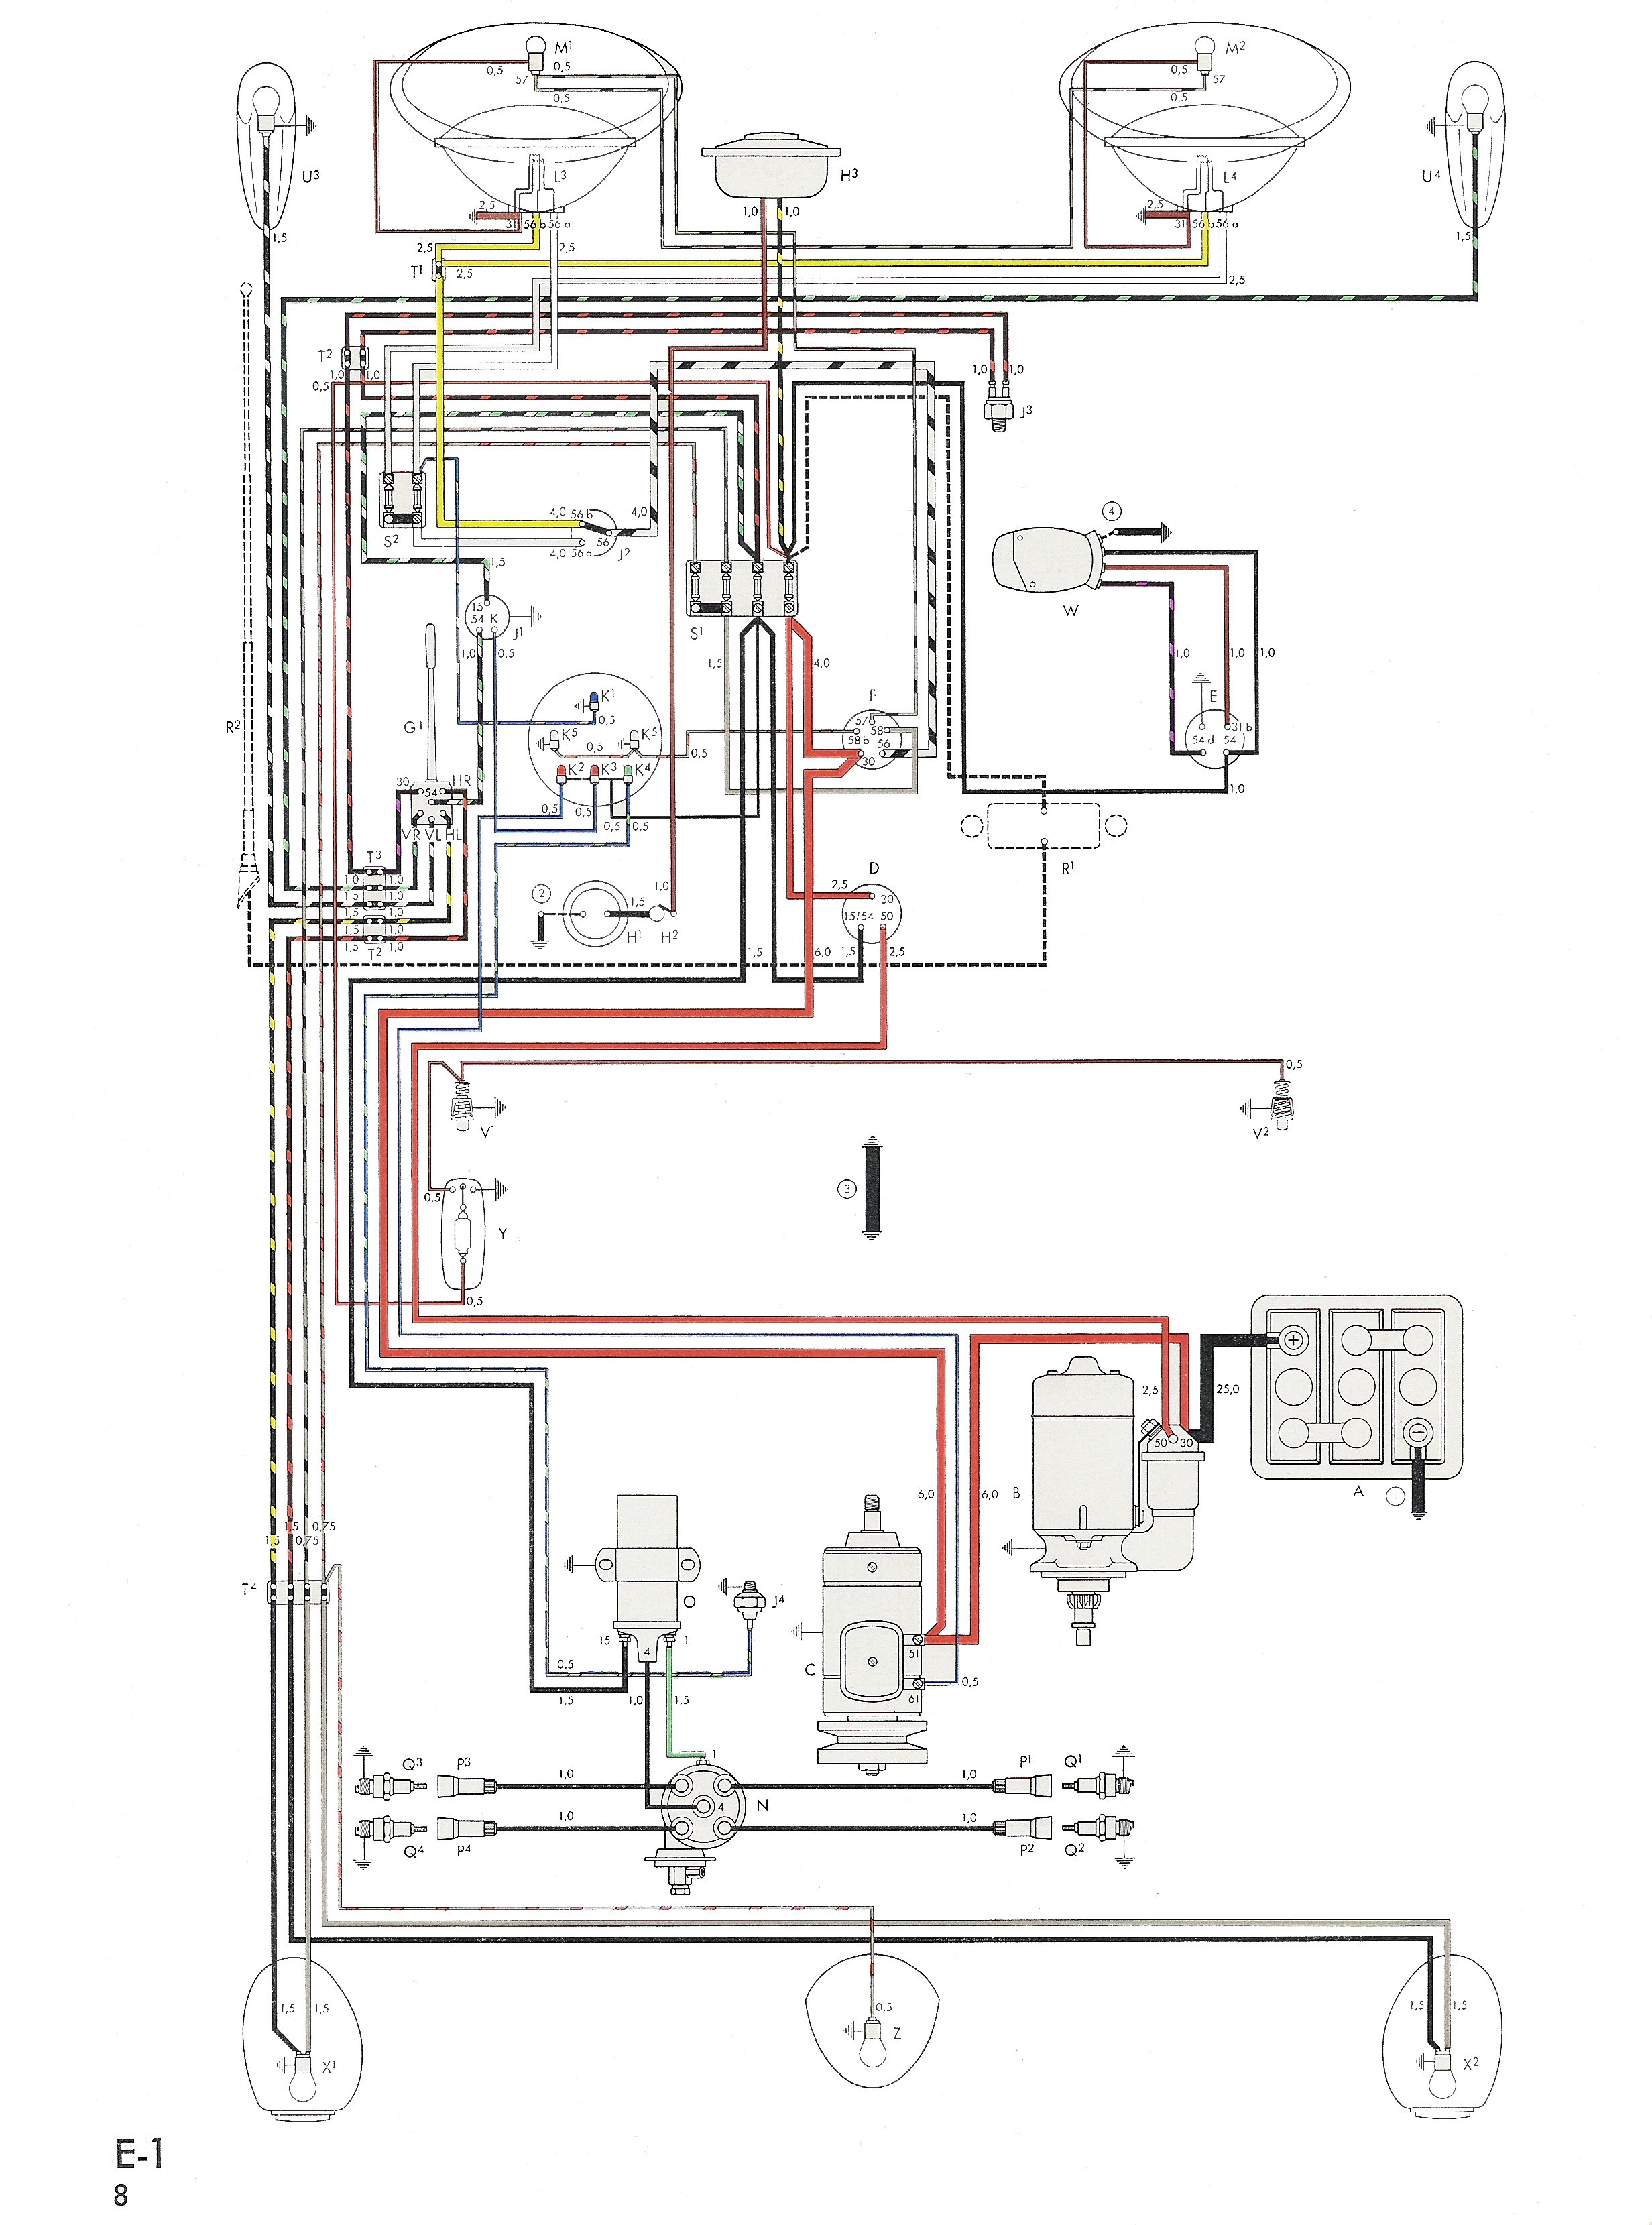 Alternator Wiring Diagram Vw Beetle Fresh Vw Bug Wiring Diy Wiring Diagrams •